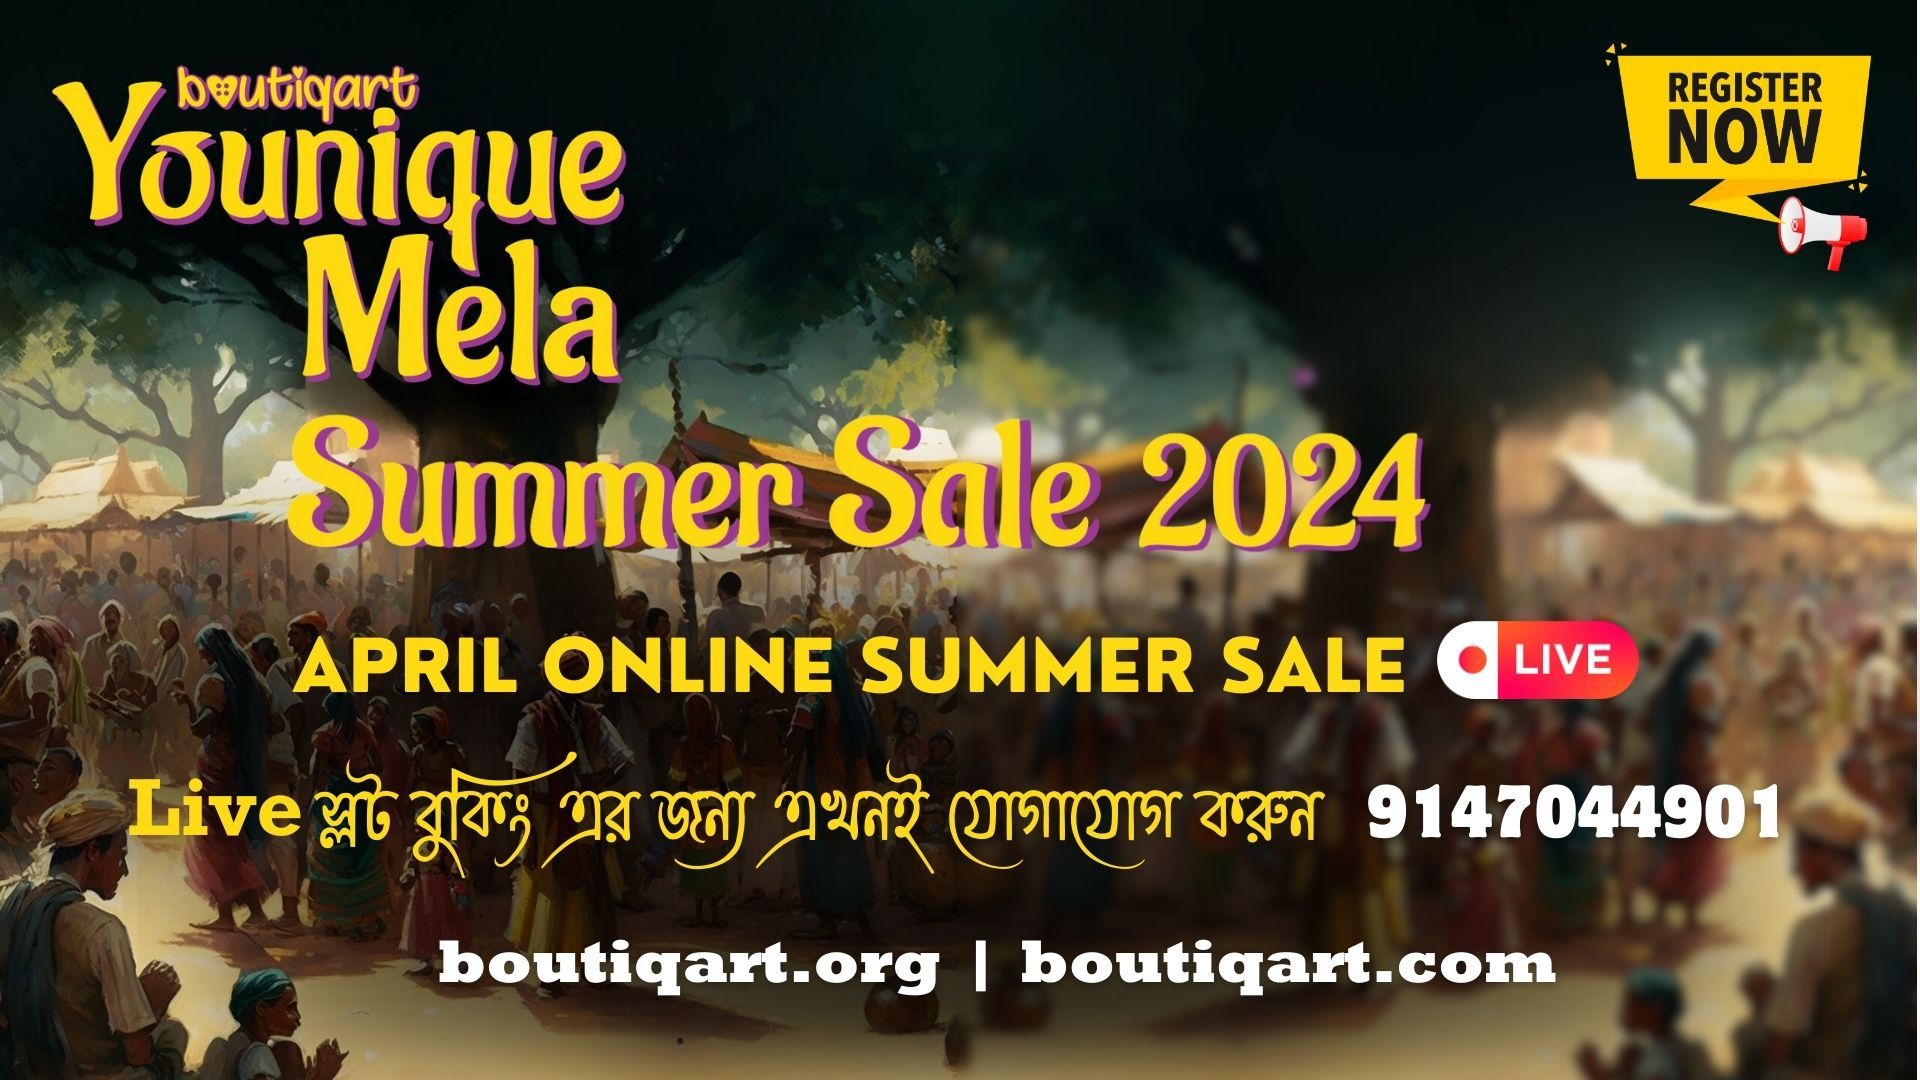 Boutiqart Younique Mela Summer Sale